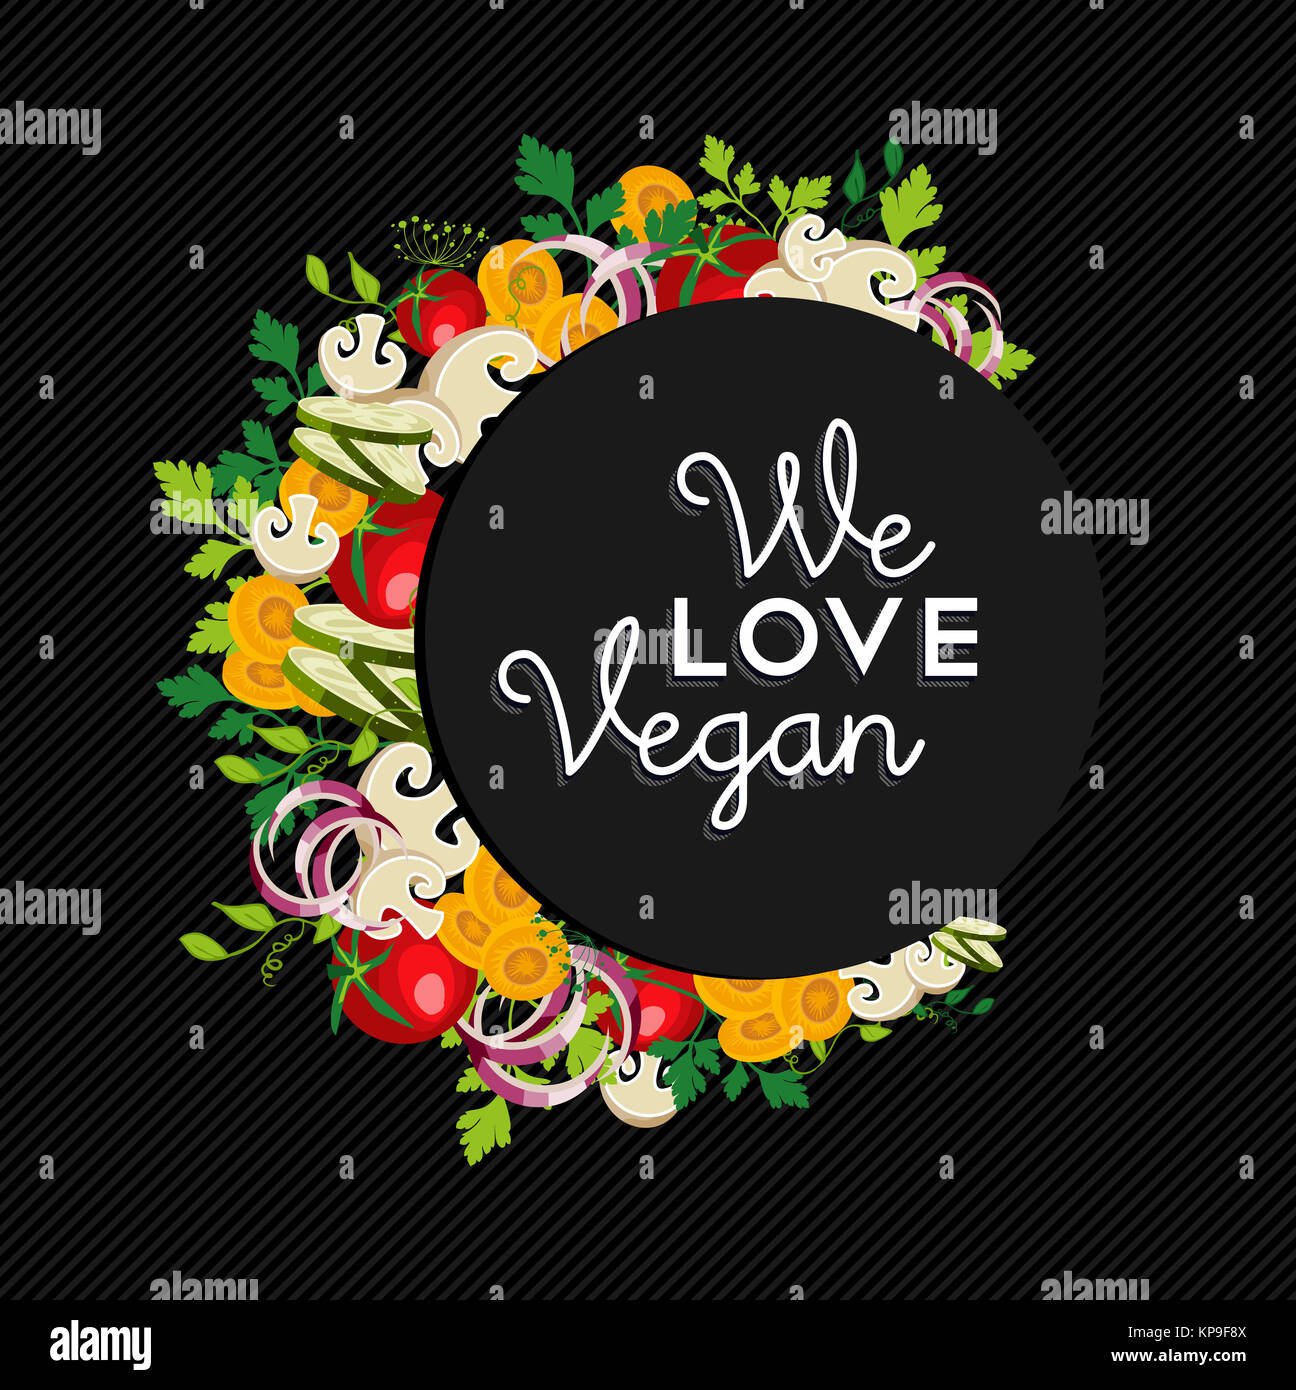 Vegan food concept illustration design with vegetables Stock Photo